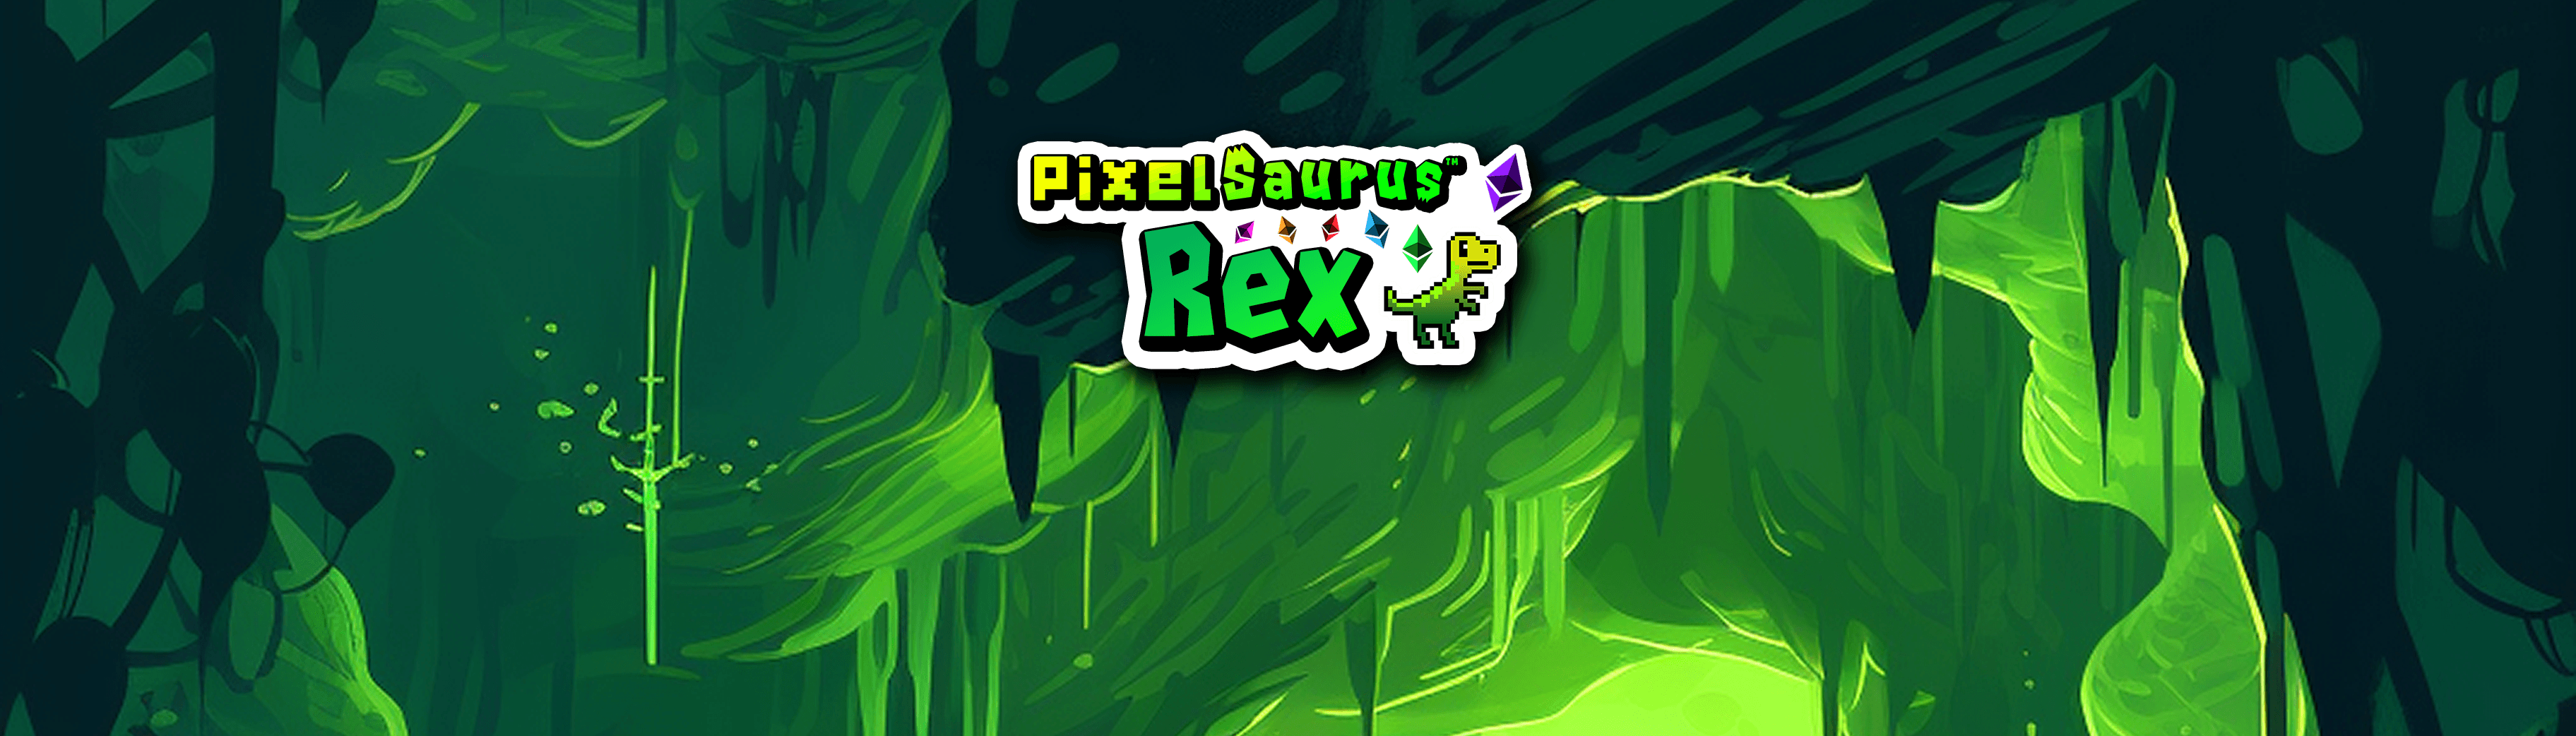 PixelSaurus Rex